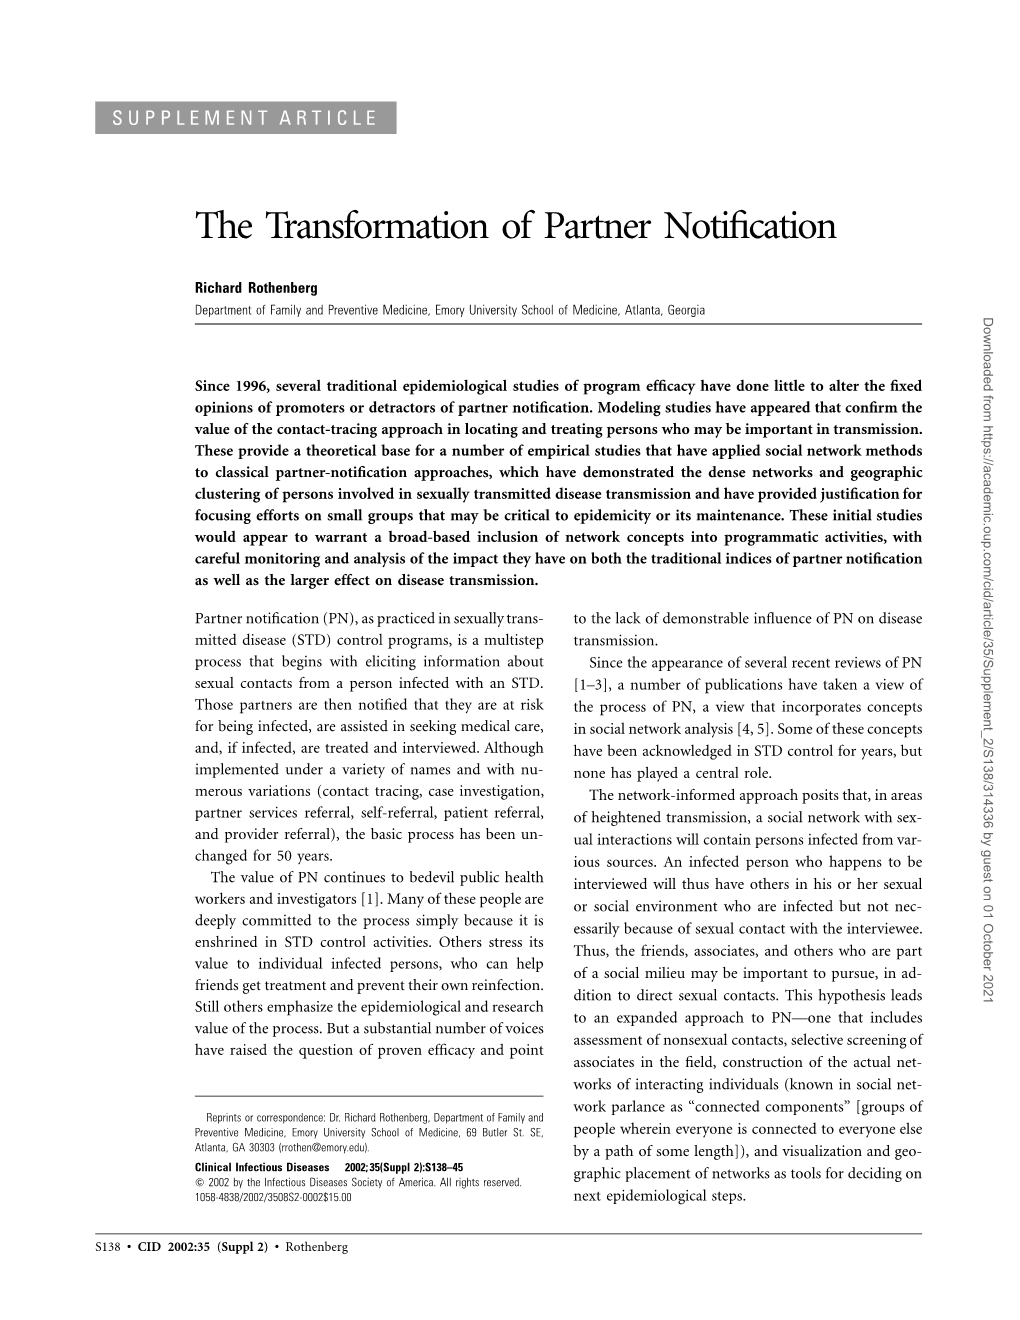 The Transformation of Partner Notification